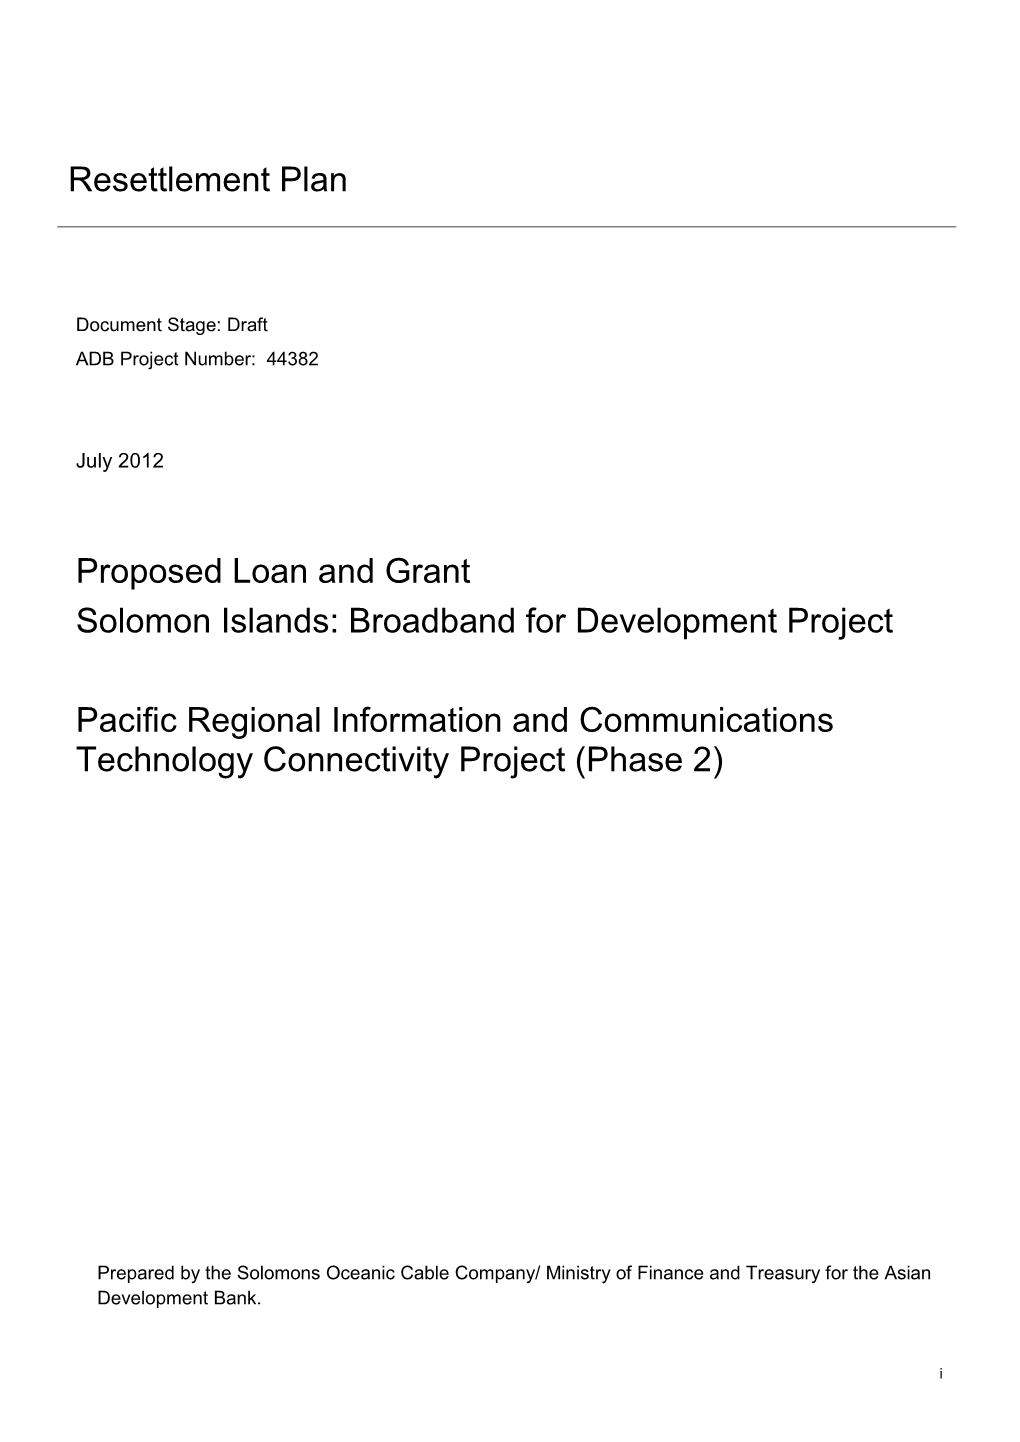 Solomon Islands: Broadband for Development Project